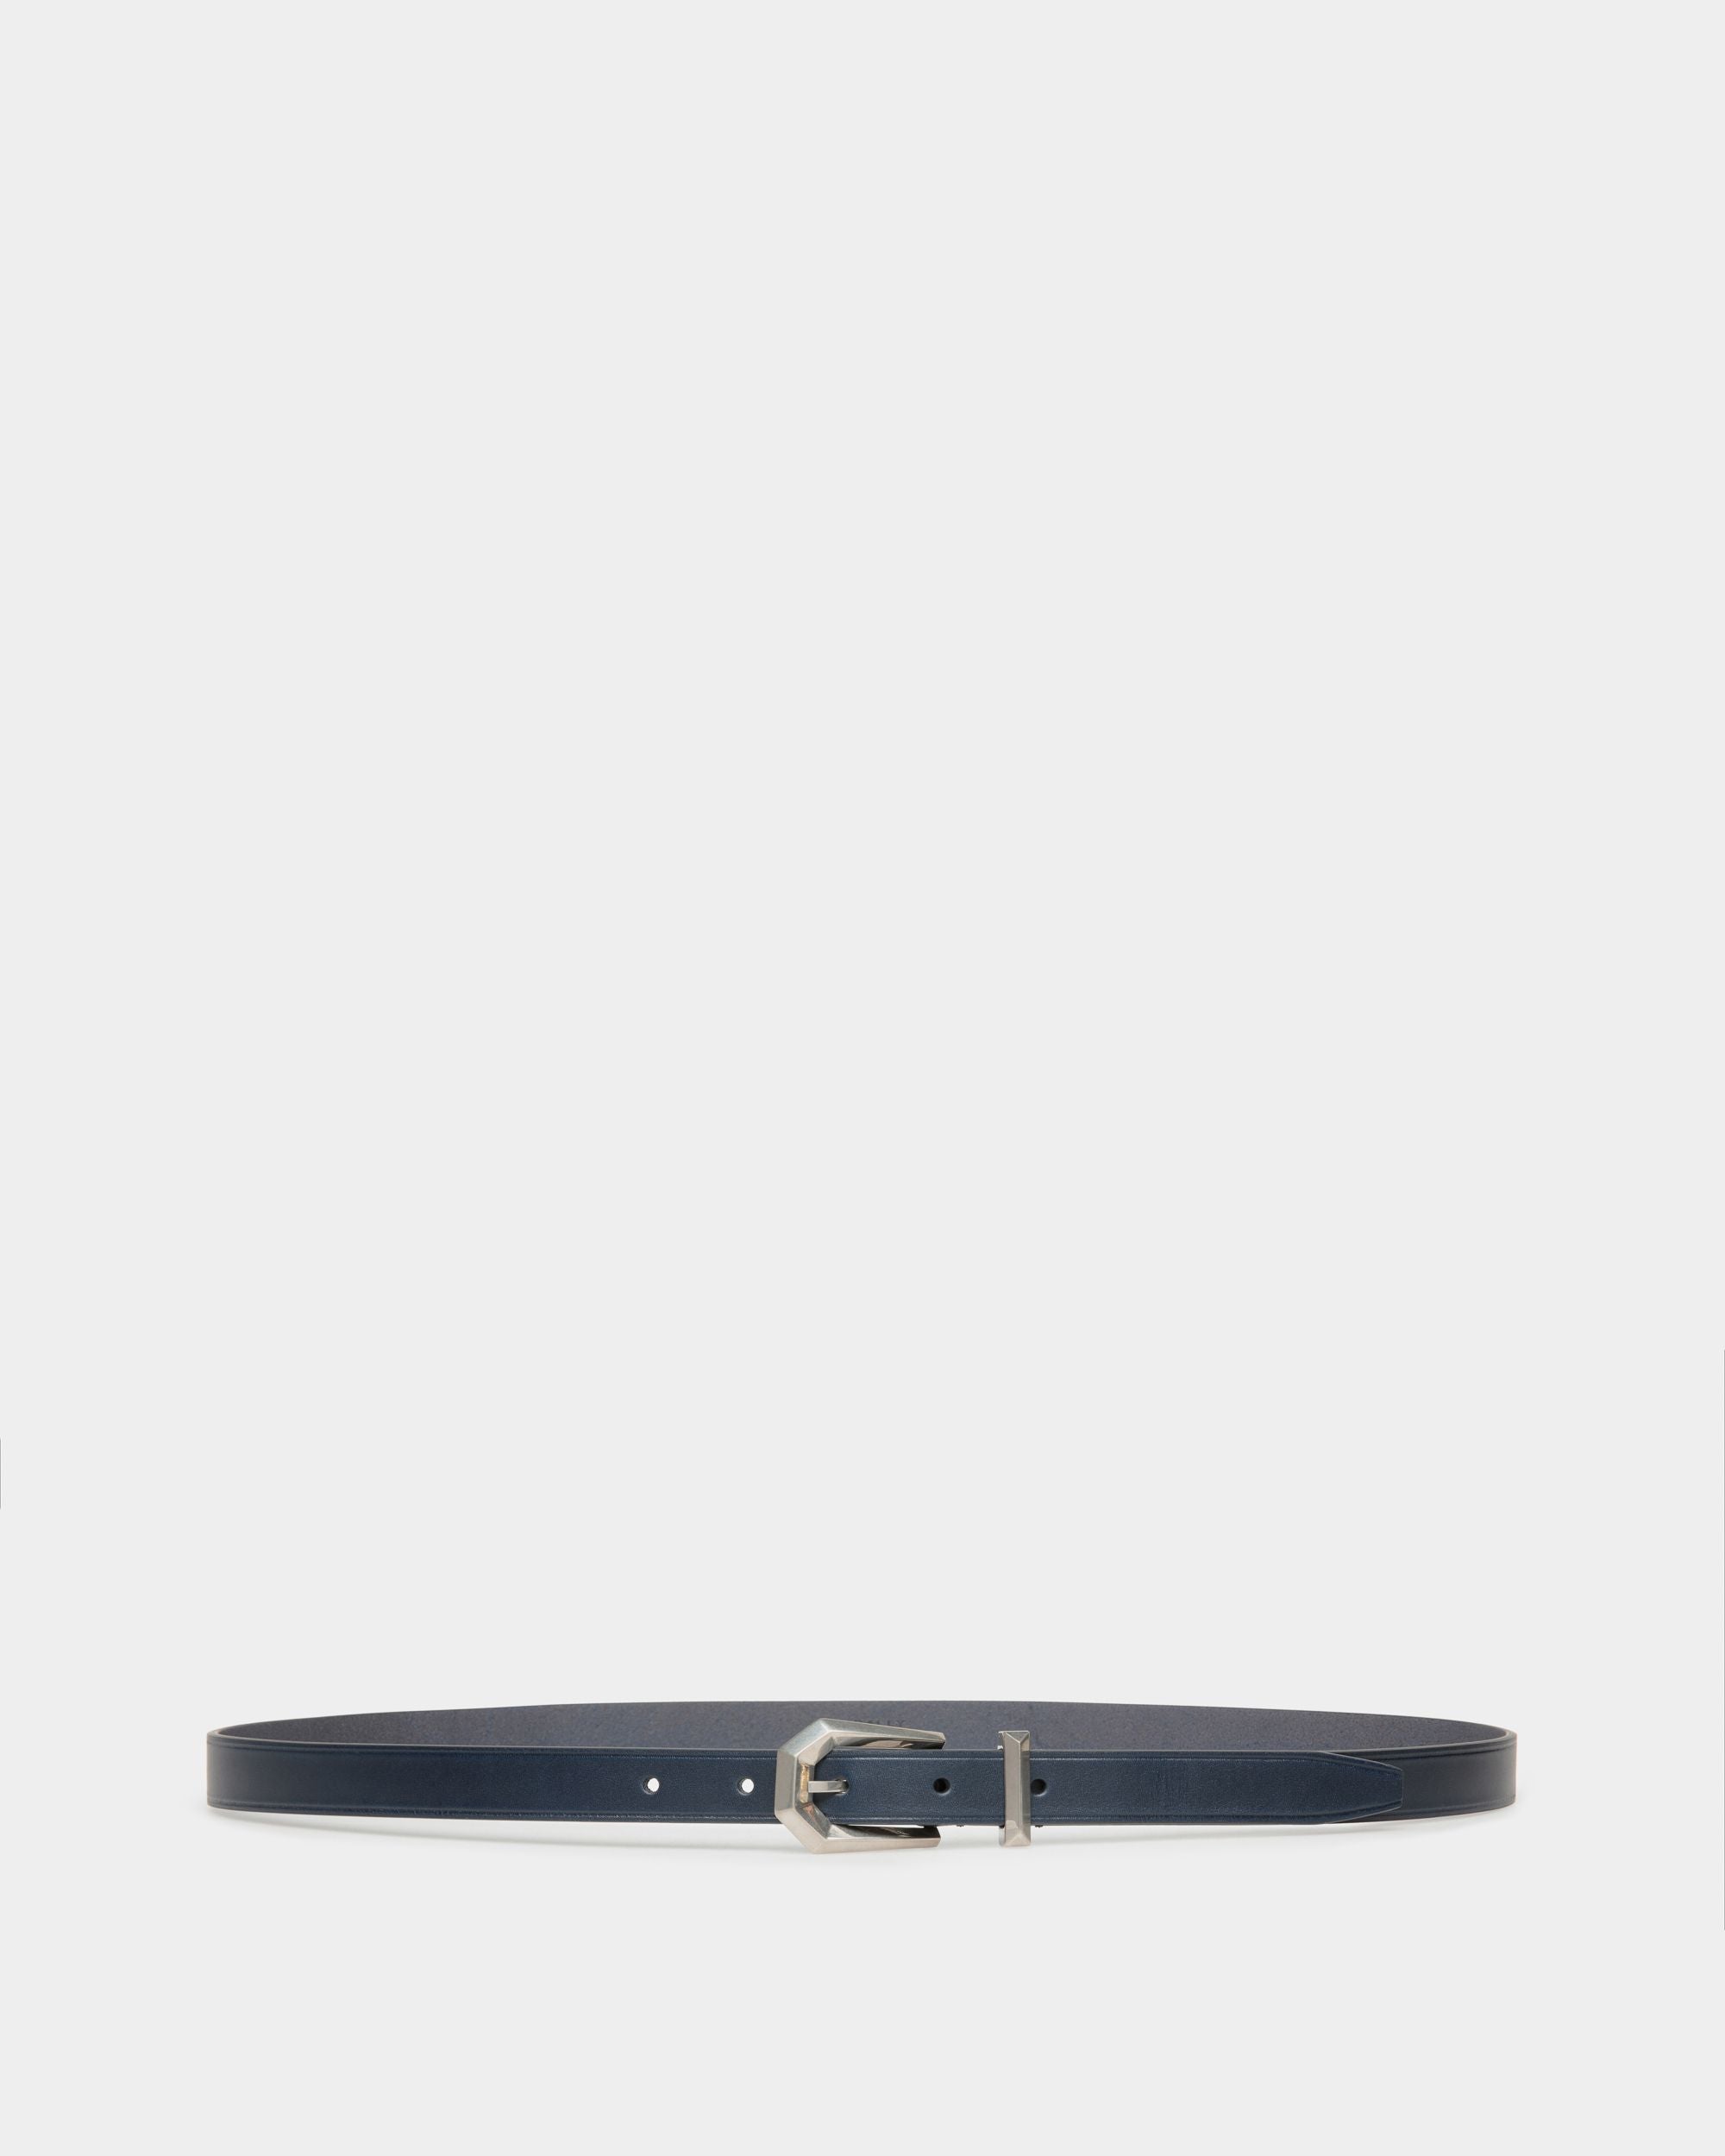 Men's Prisma 20mm Belt in Navy Blue Leather | Bally | Still Life Front